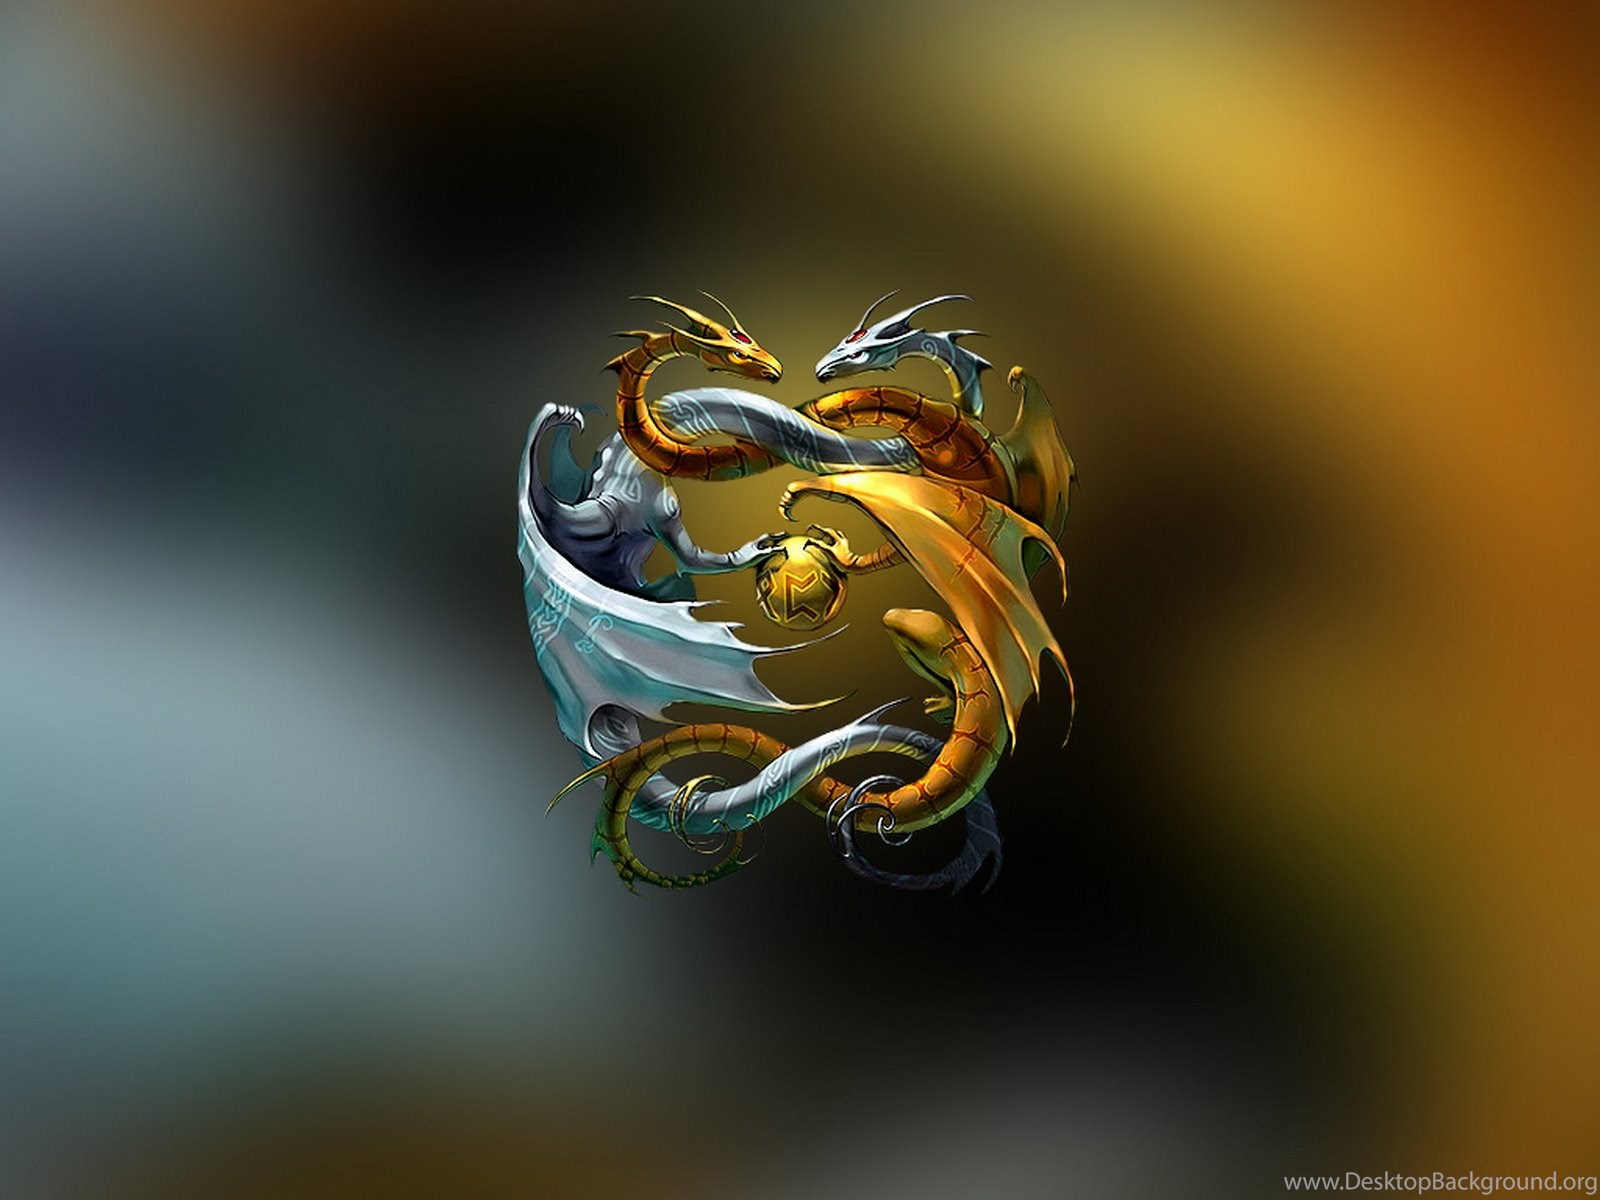 Free Download Martial Art Yin Yang Logo And Wallpaper 03 4853. Desktop Background